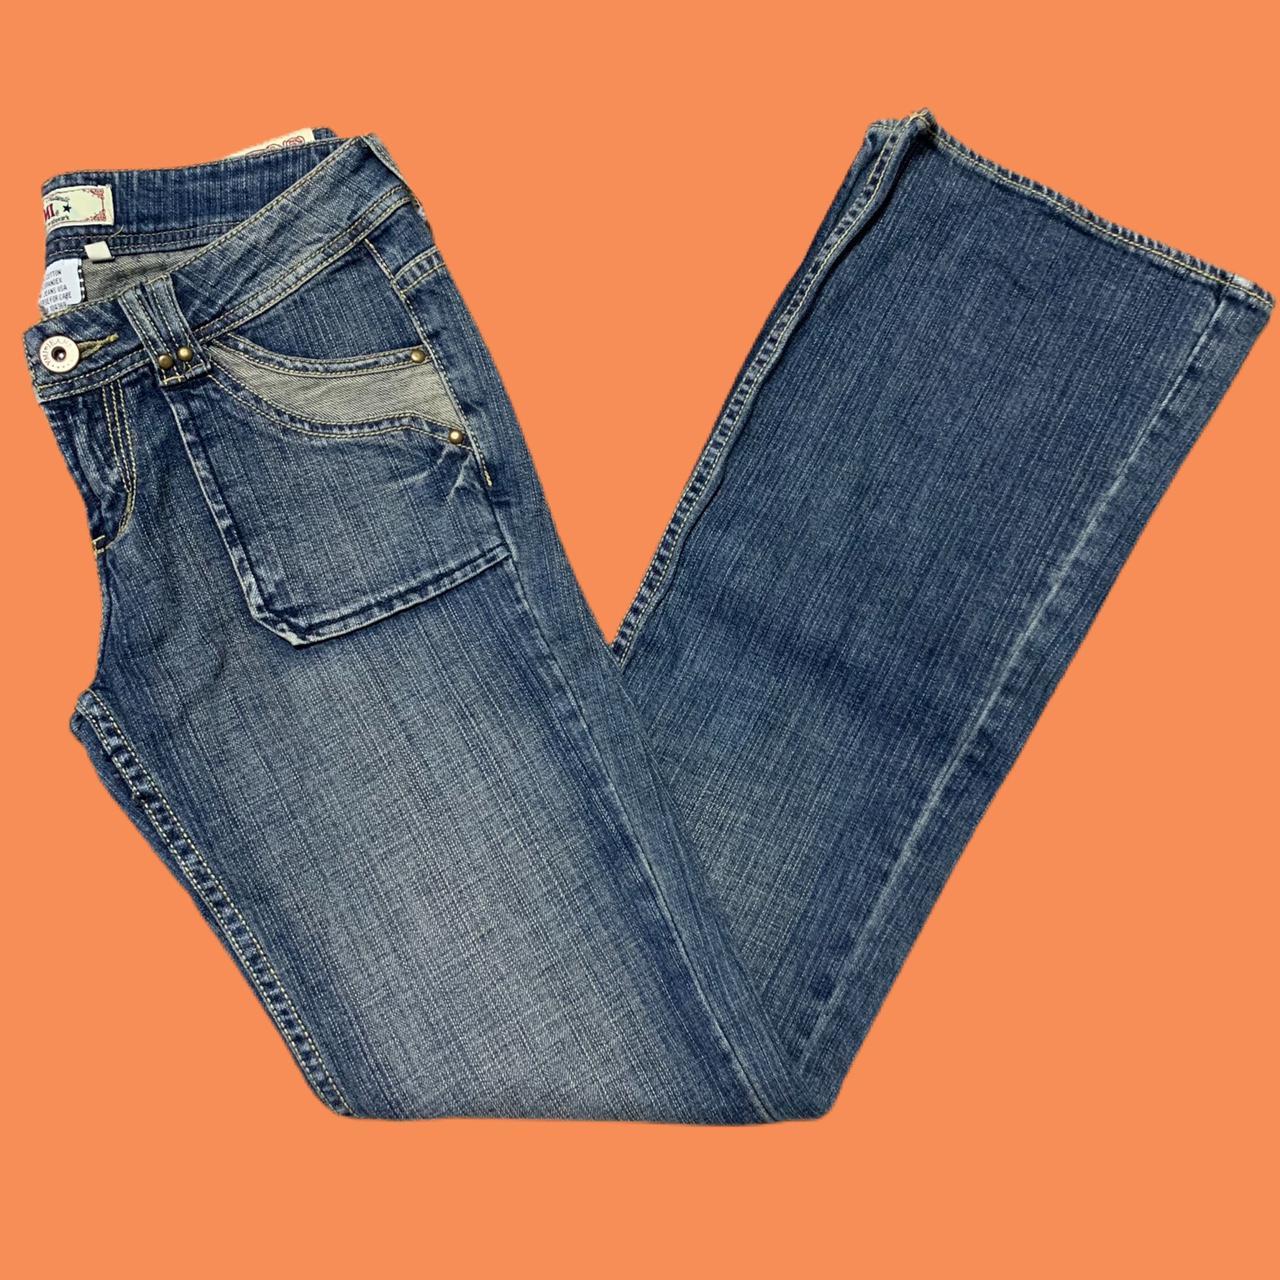 Stunning YMI Low Rise Bootcut Jeans w/ Cute... - Depop